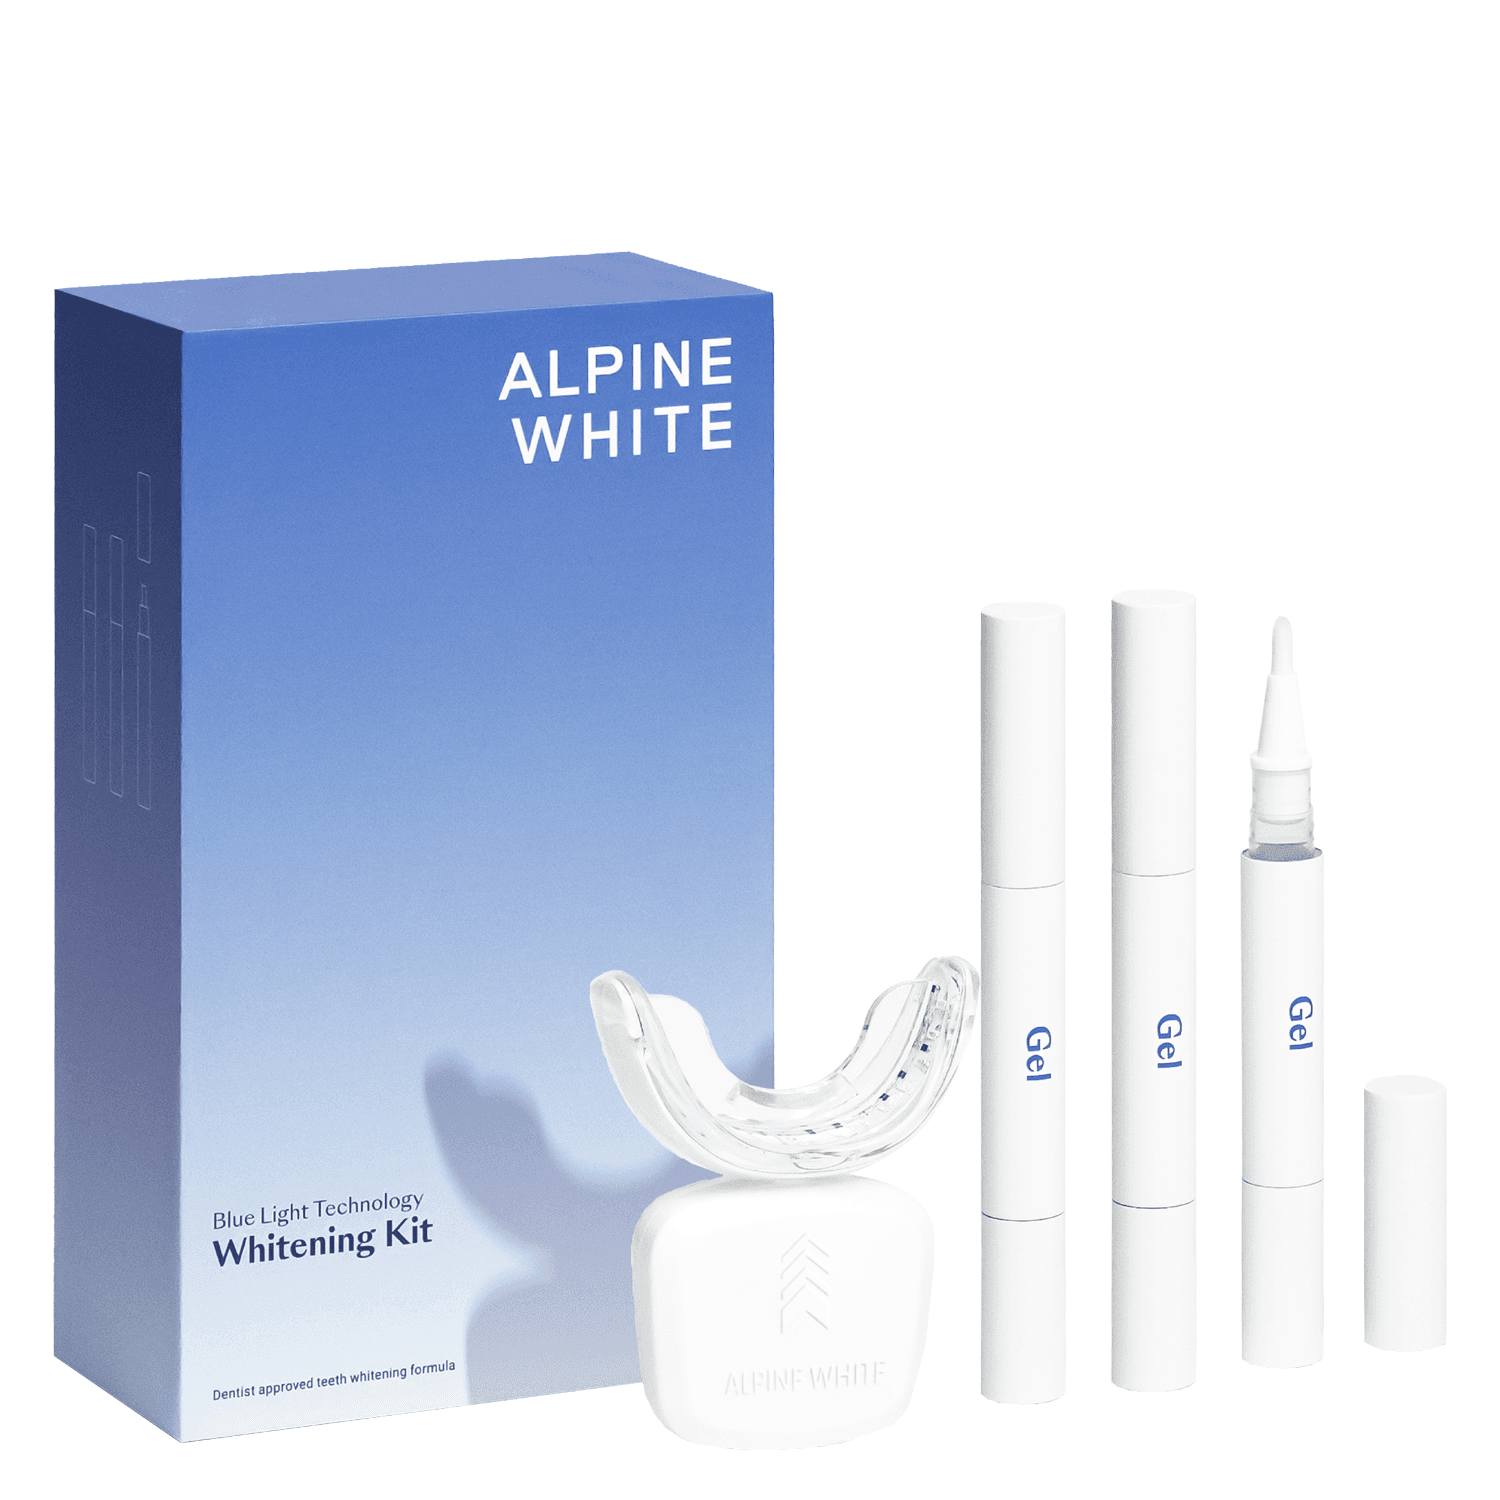 ALPINE WHITE - Whitening Kit